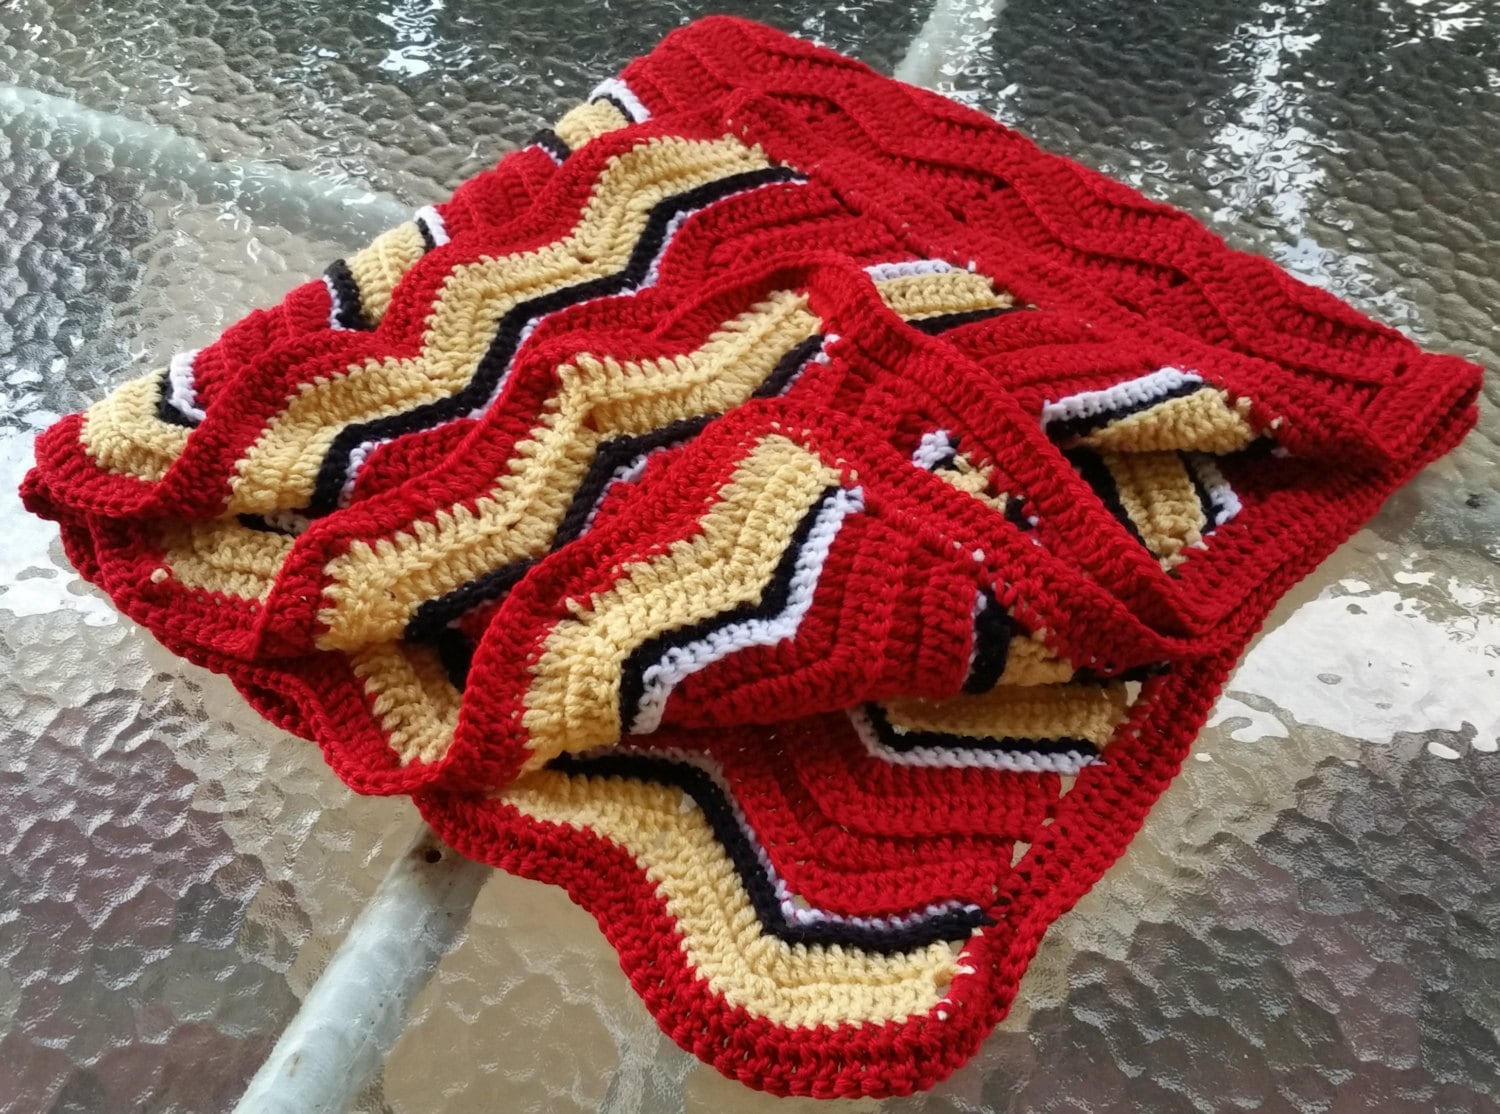 49ers baby49ers decor crochet baby blanket by GrammysCustomCrochet